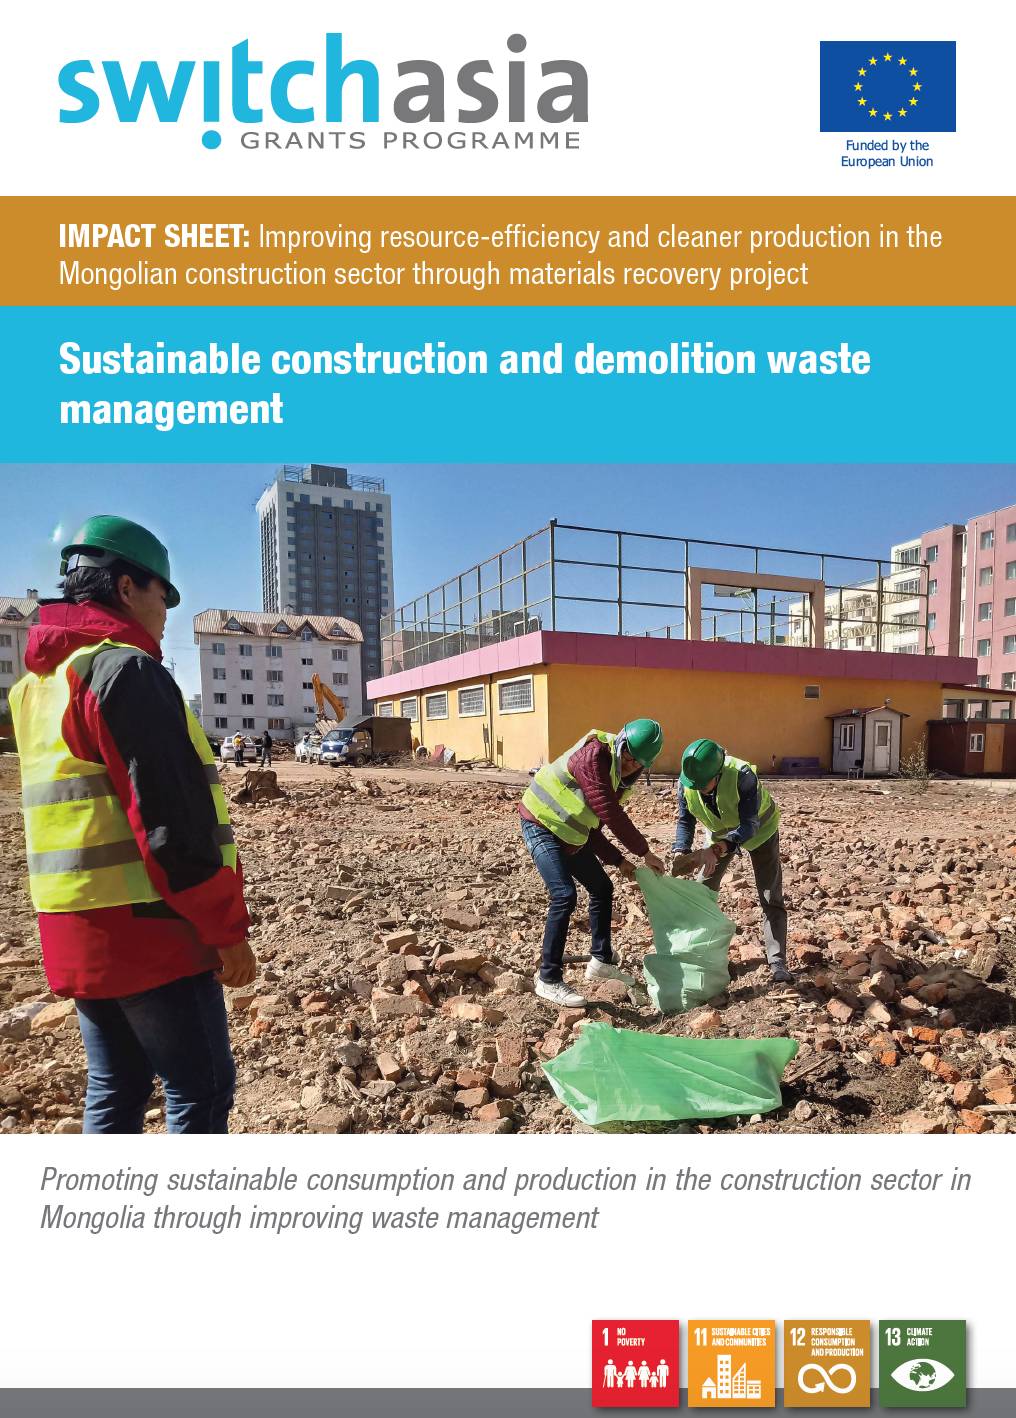 Impact Sheet: Recycling Building Materials